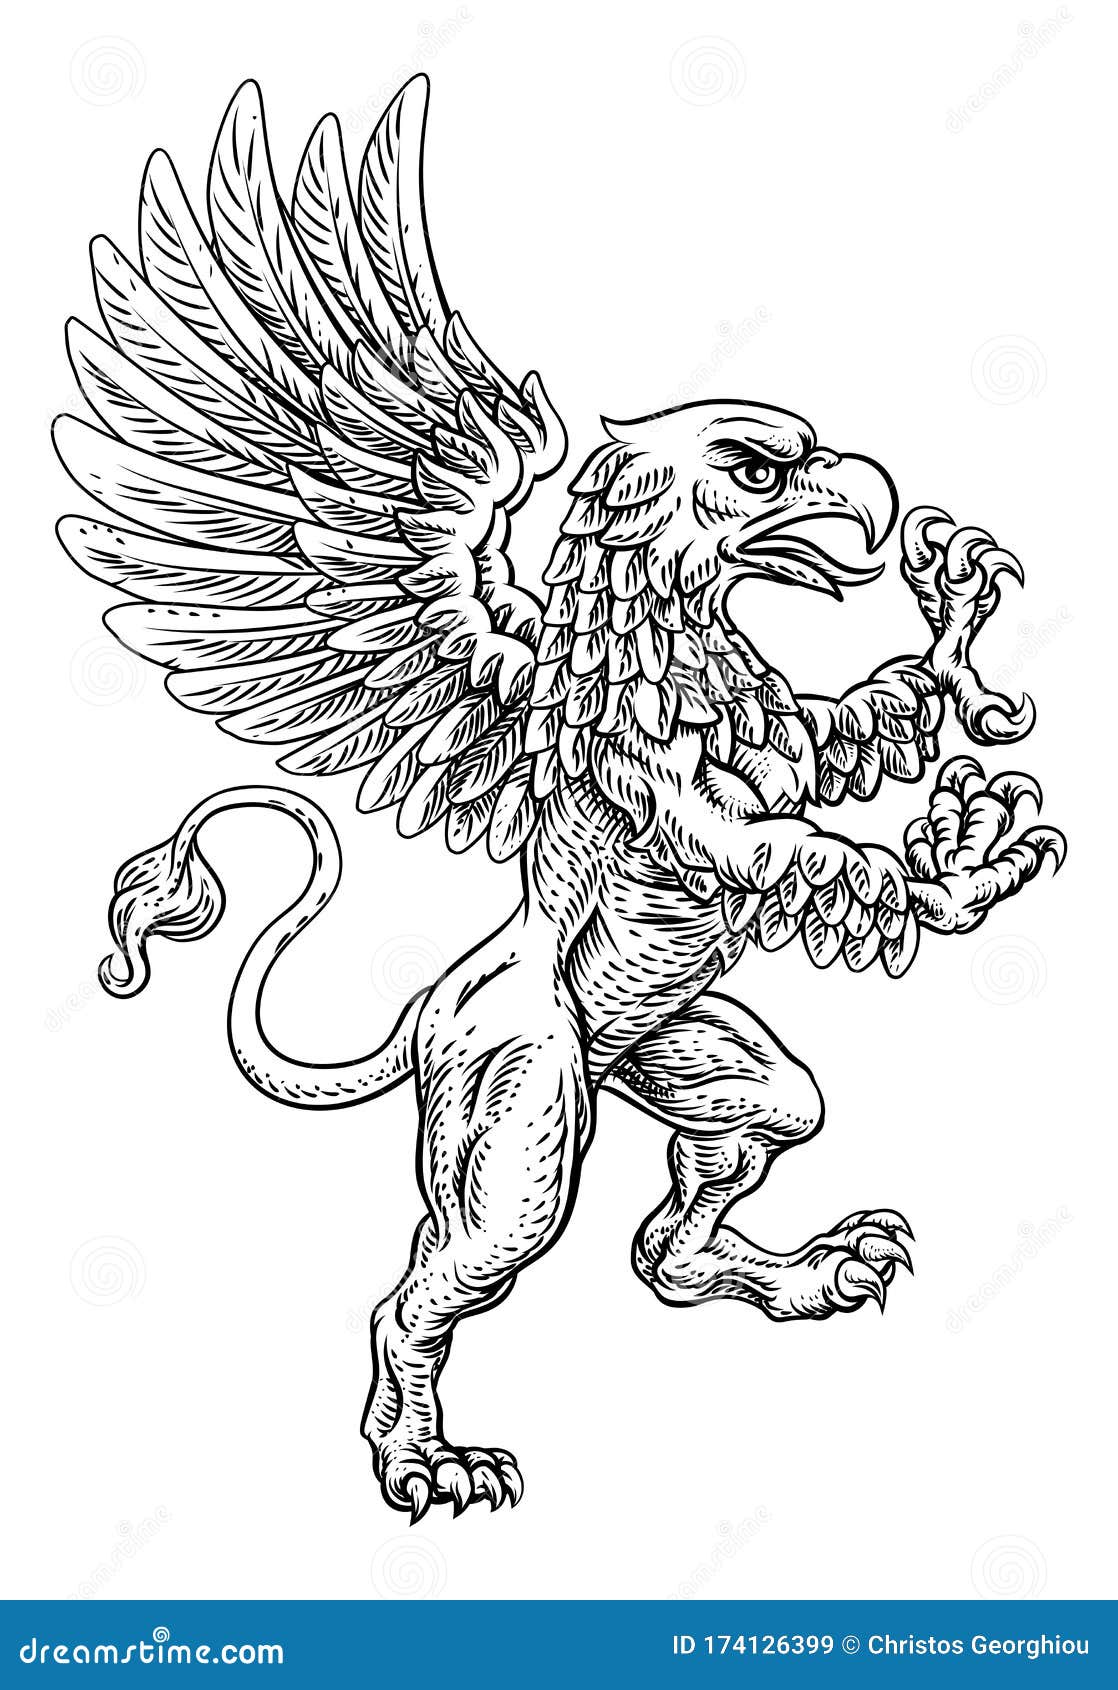 griffon rampant gryphon coat of arms crest mascot